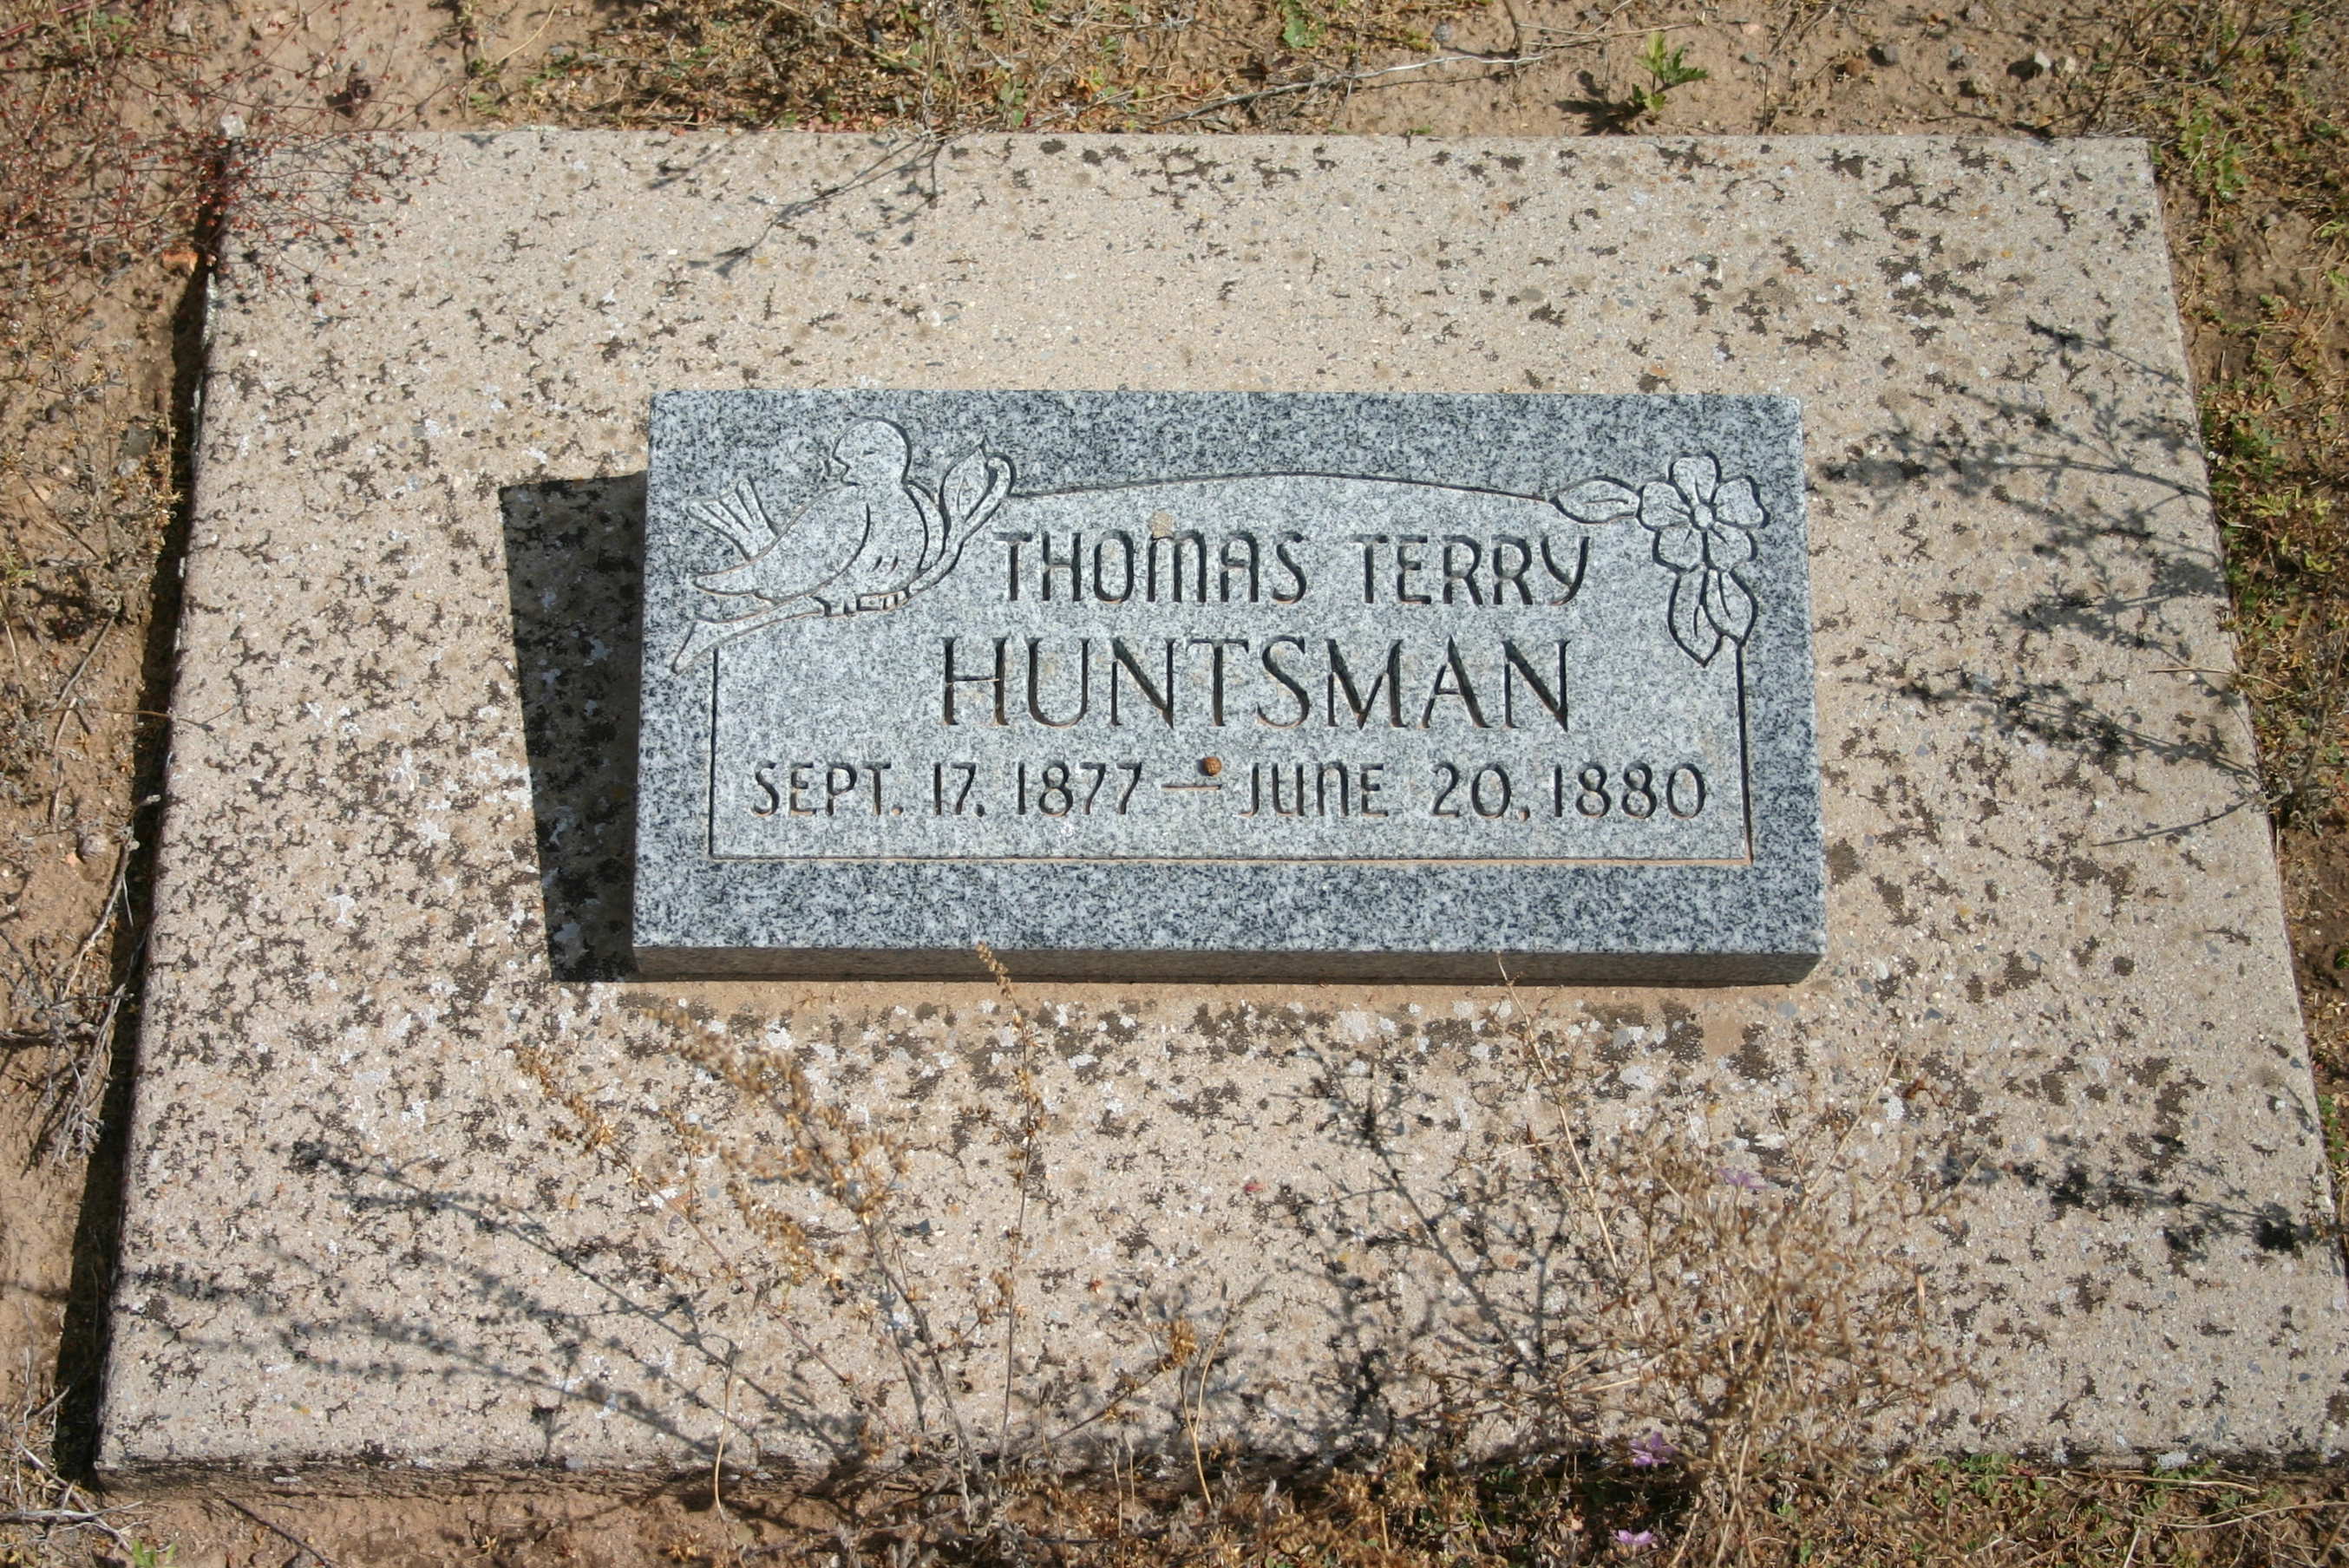 Thomas Terry Huntsman gravestone at the Hebron Cemetery